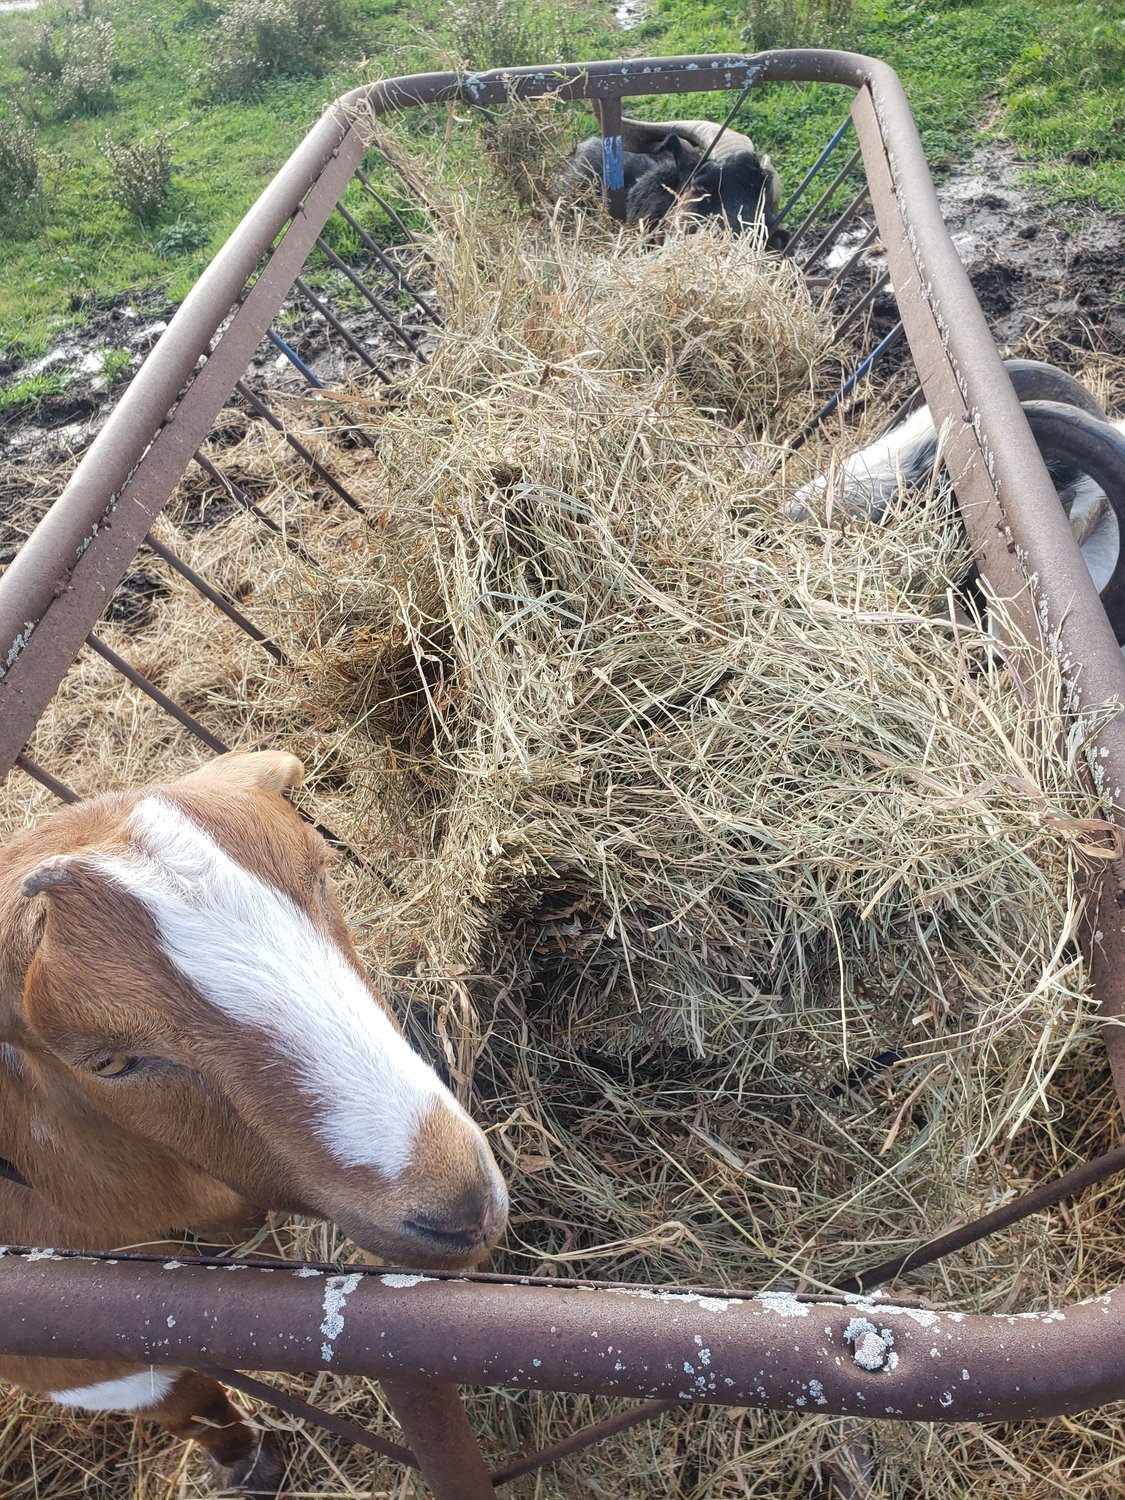 Everyone enjoying breakfast in the outside hay rack.